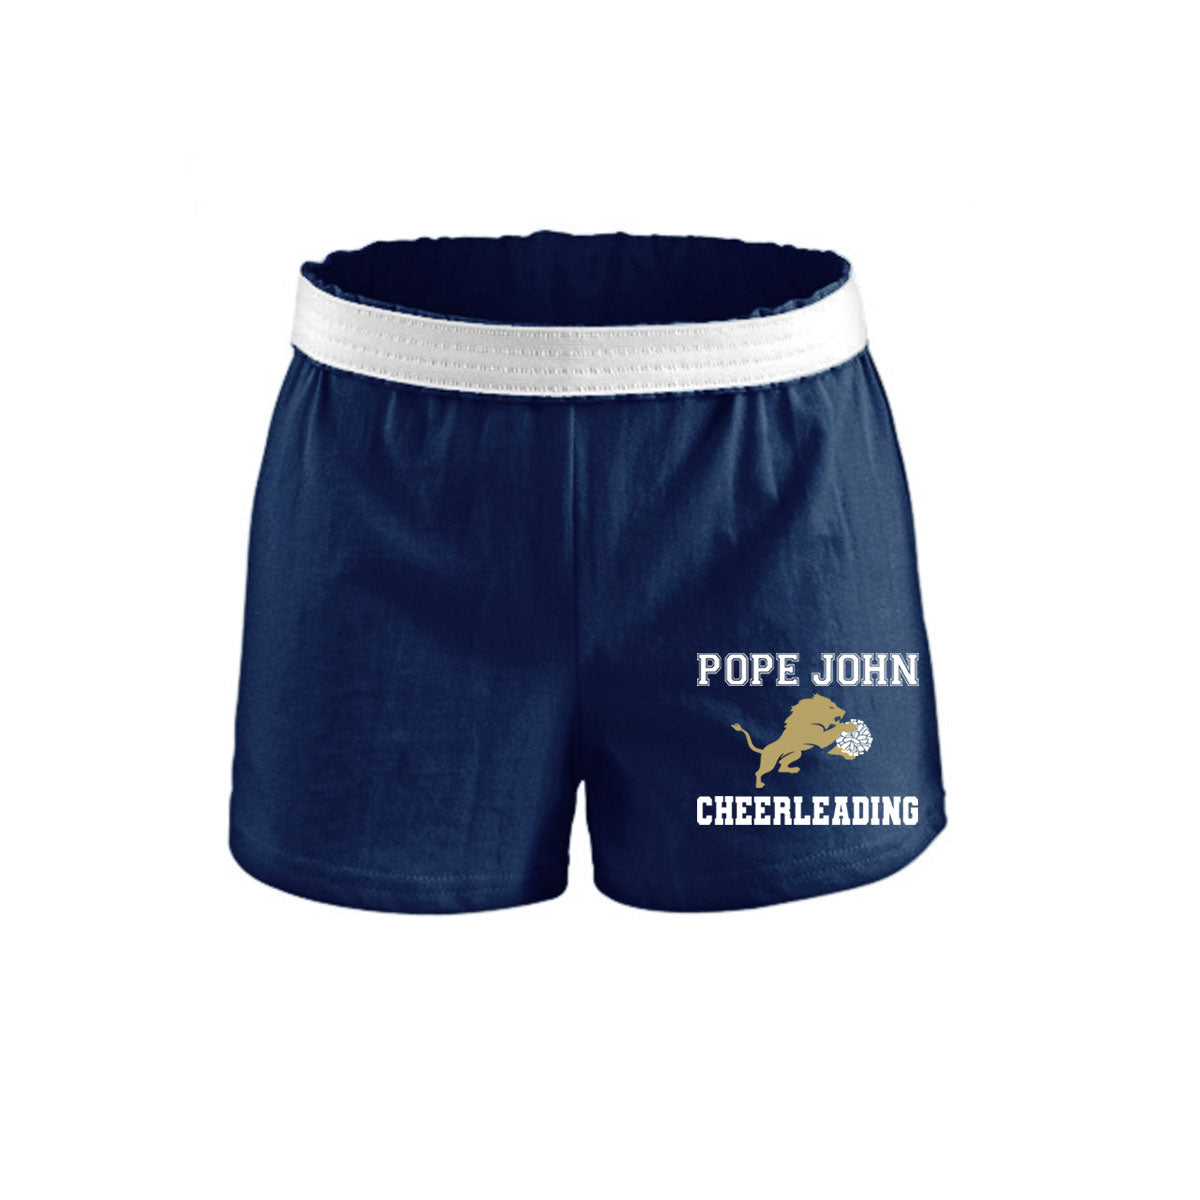 Pope John Cheer Design 1 Shorts